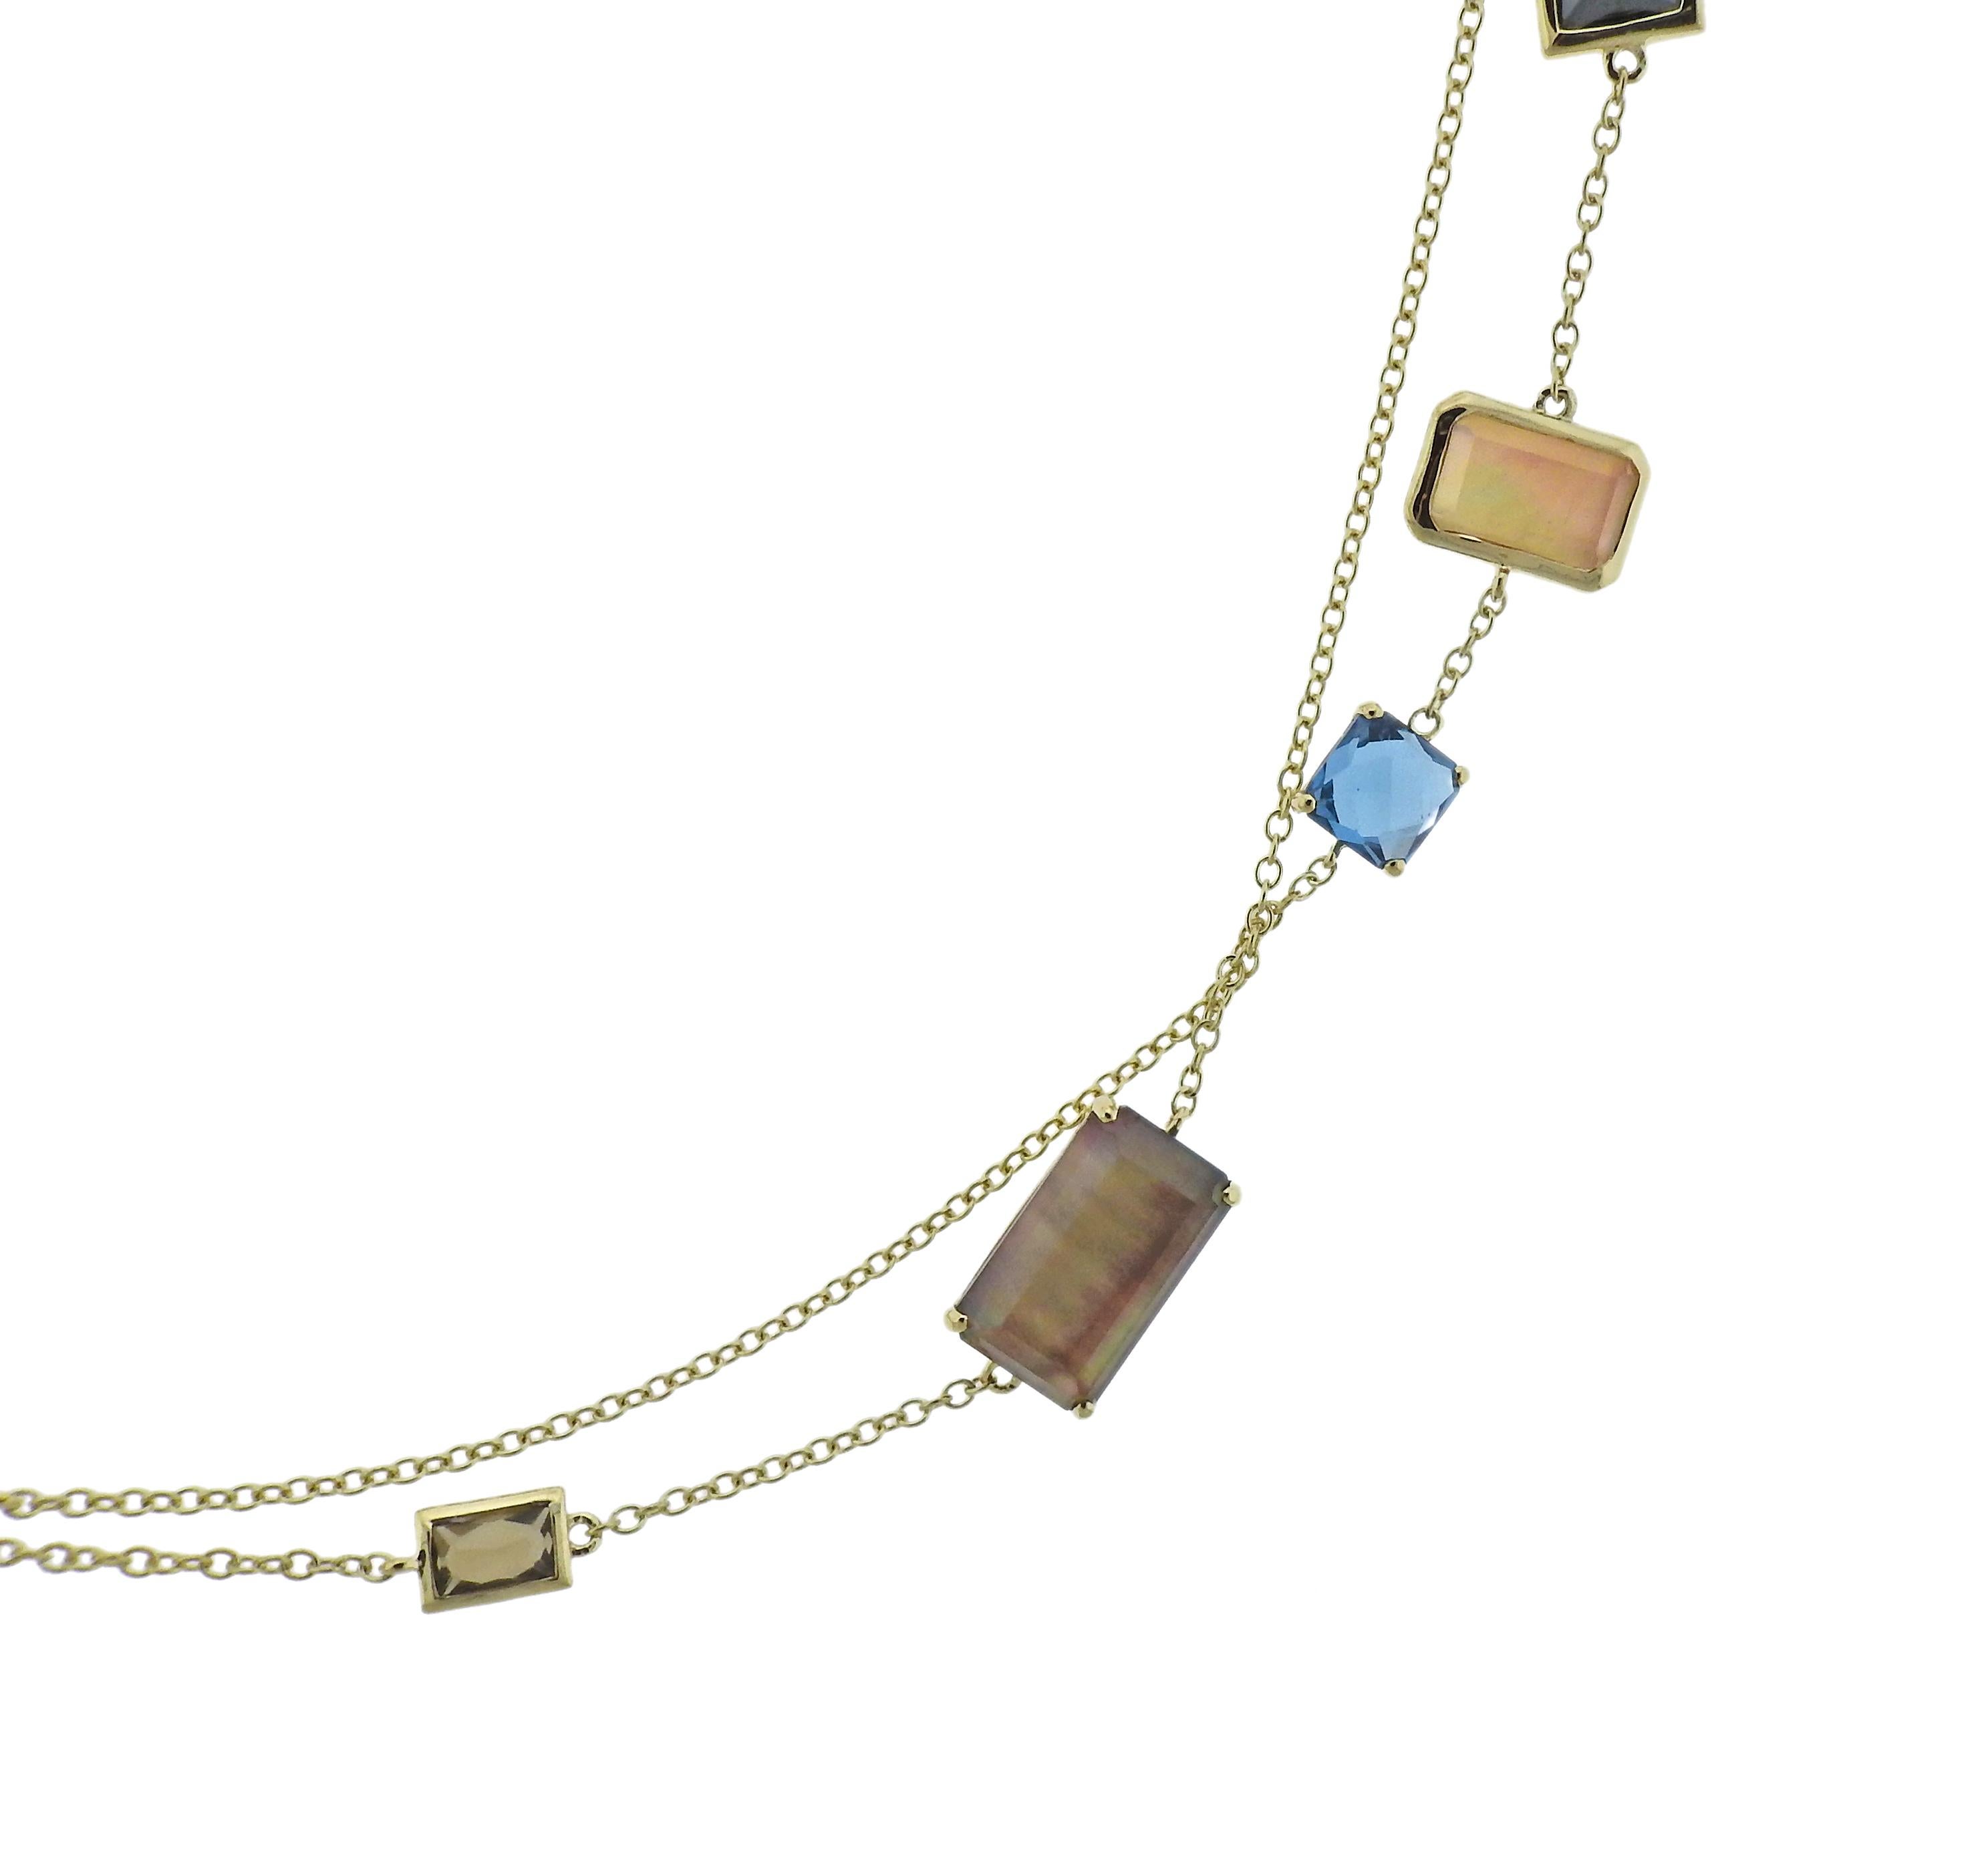 18k gold long station necklace by Ippolita, set with Hematite, Quartz, Topaz, Citrine, Shell. Necklace is 36